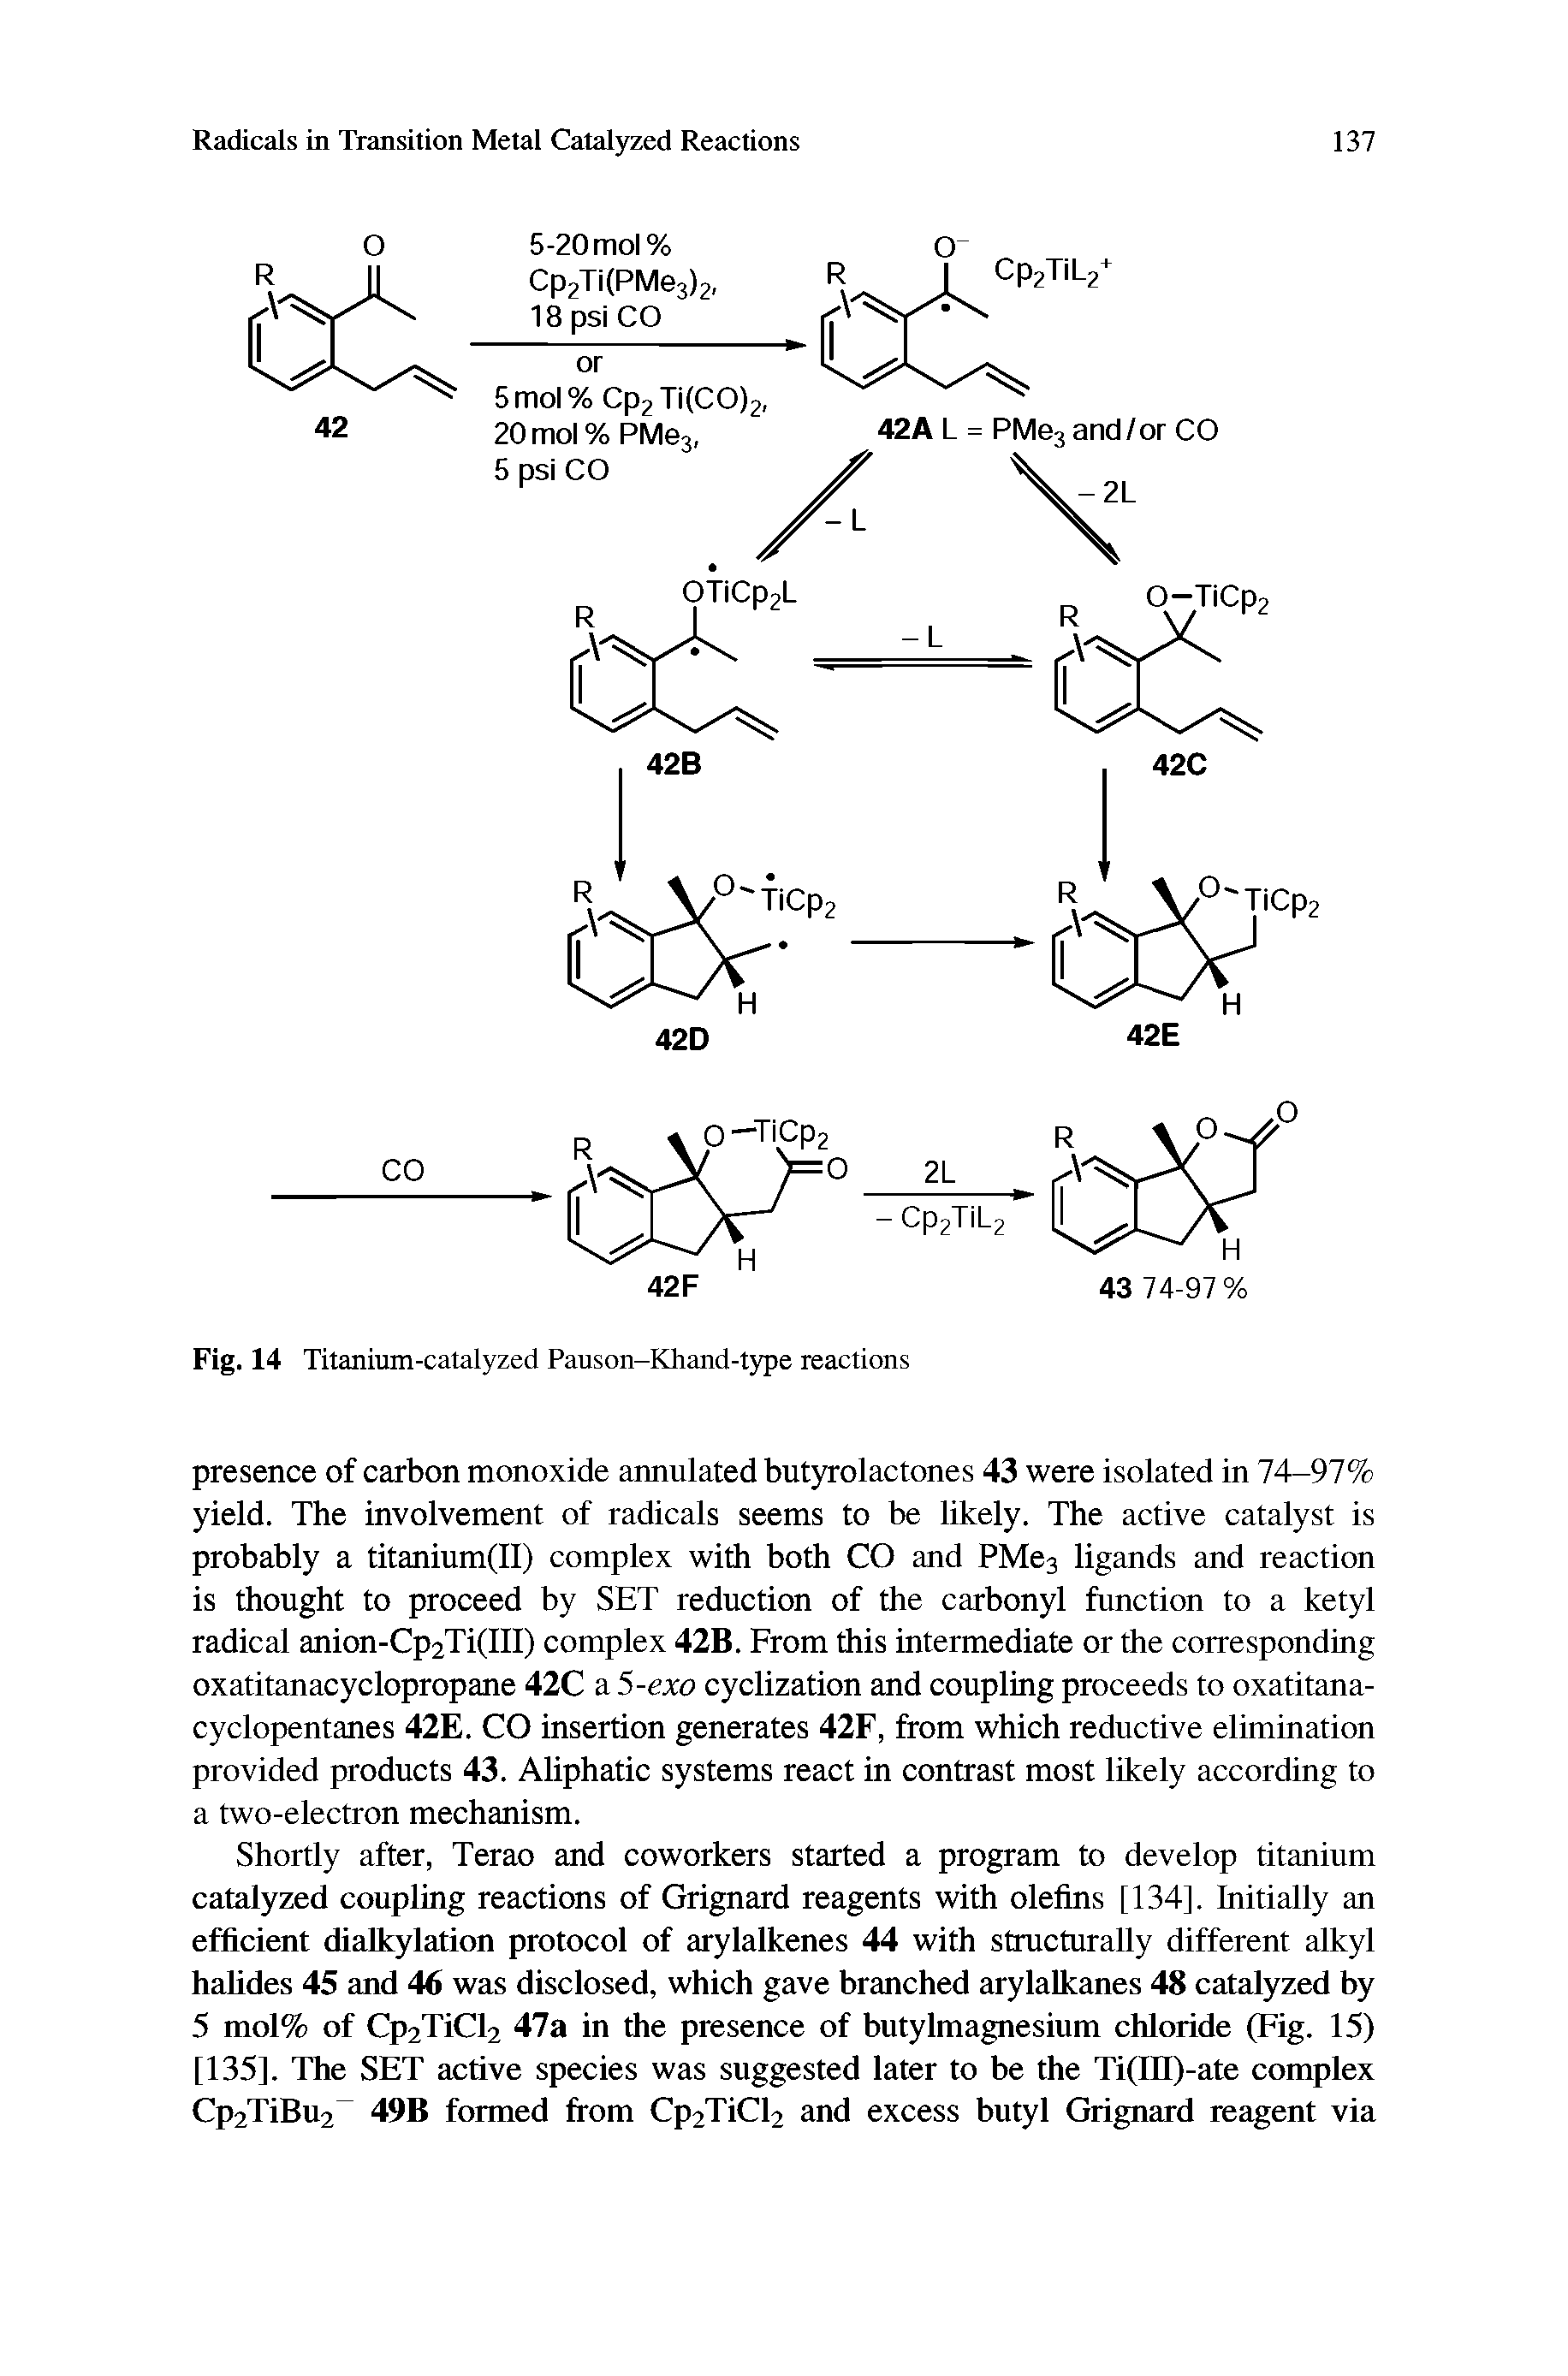 Fig. 14 Titanium-catalyzed Pauson-Khand-type reactions...